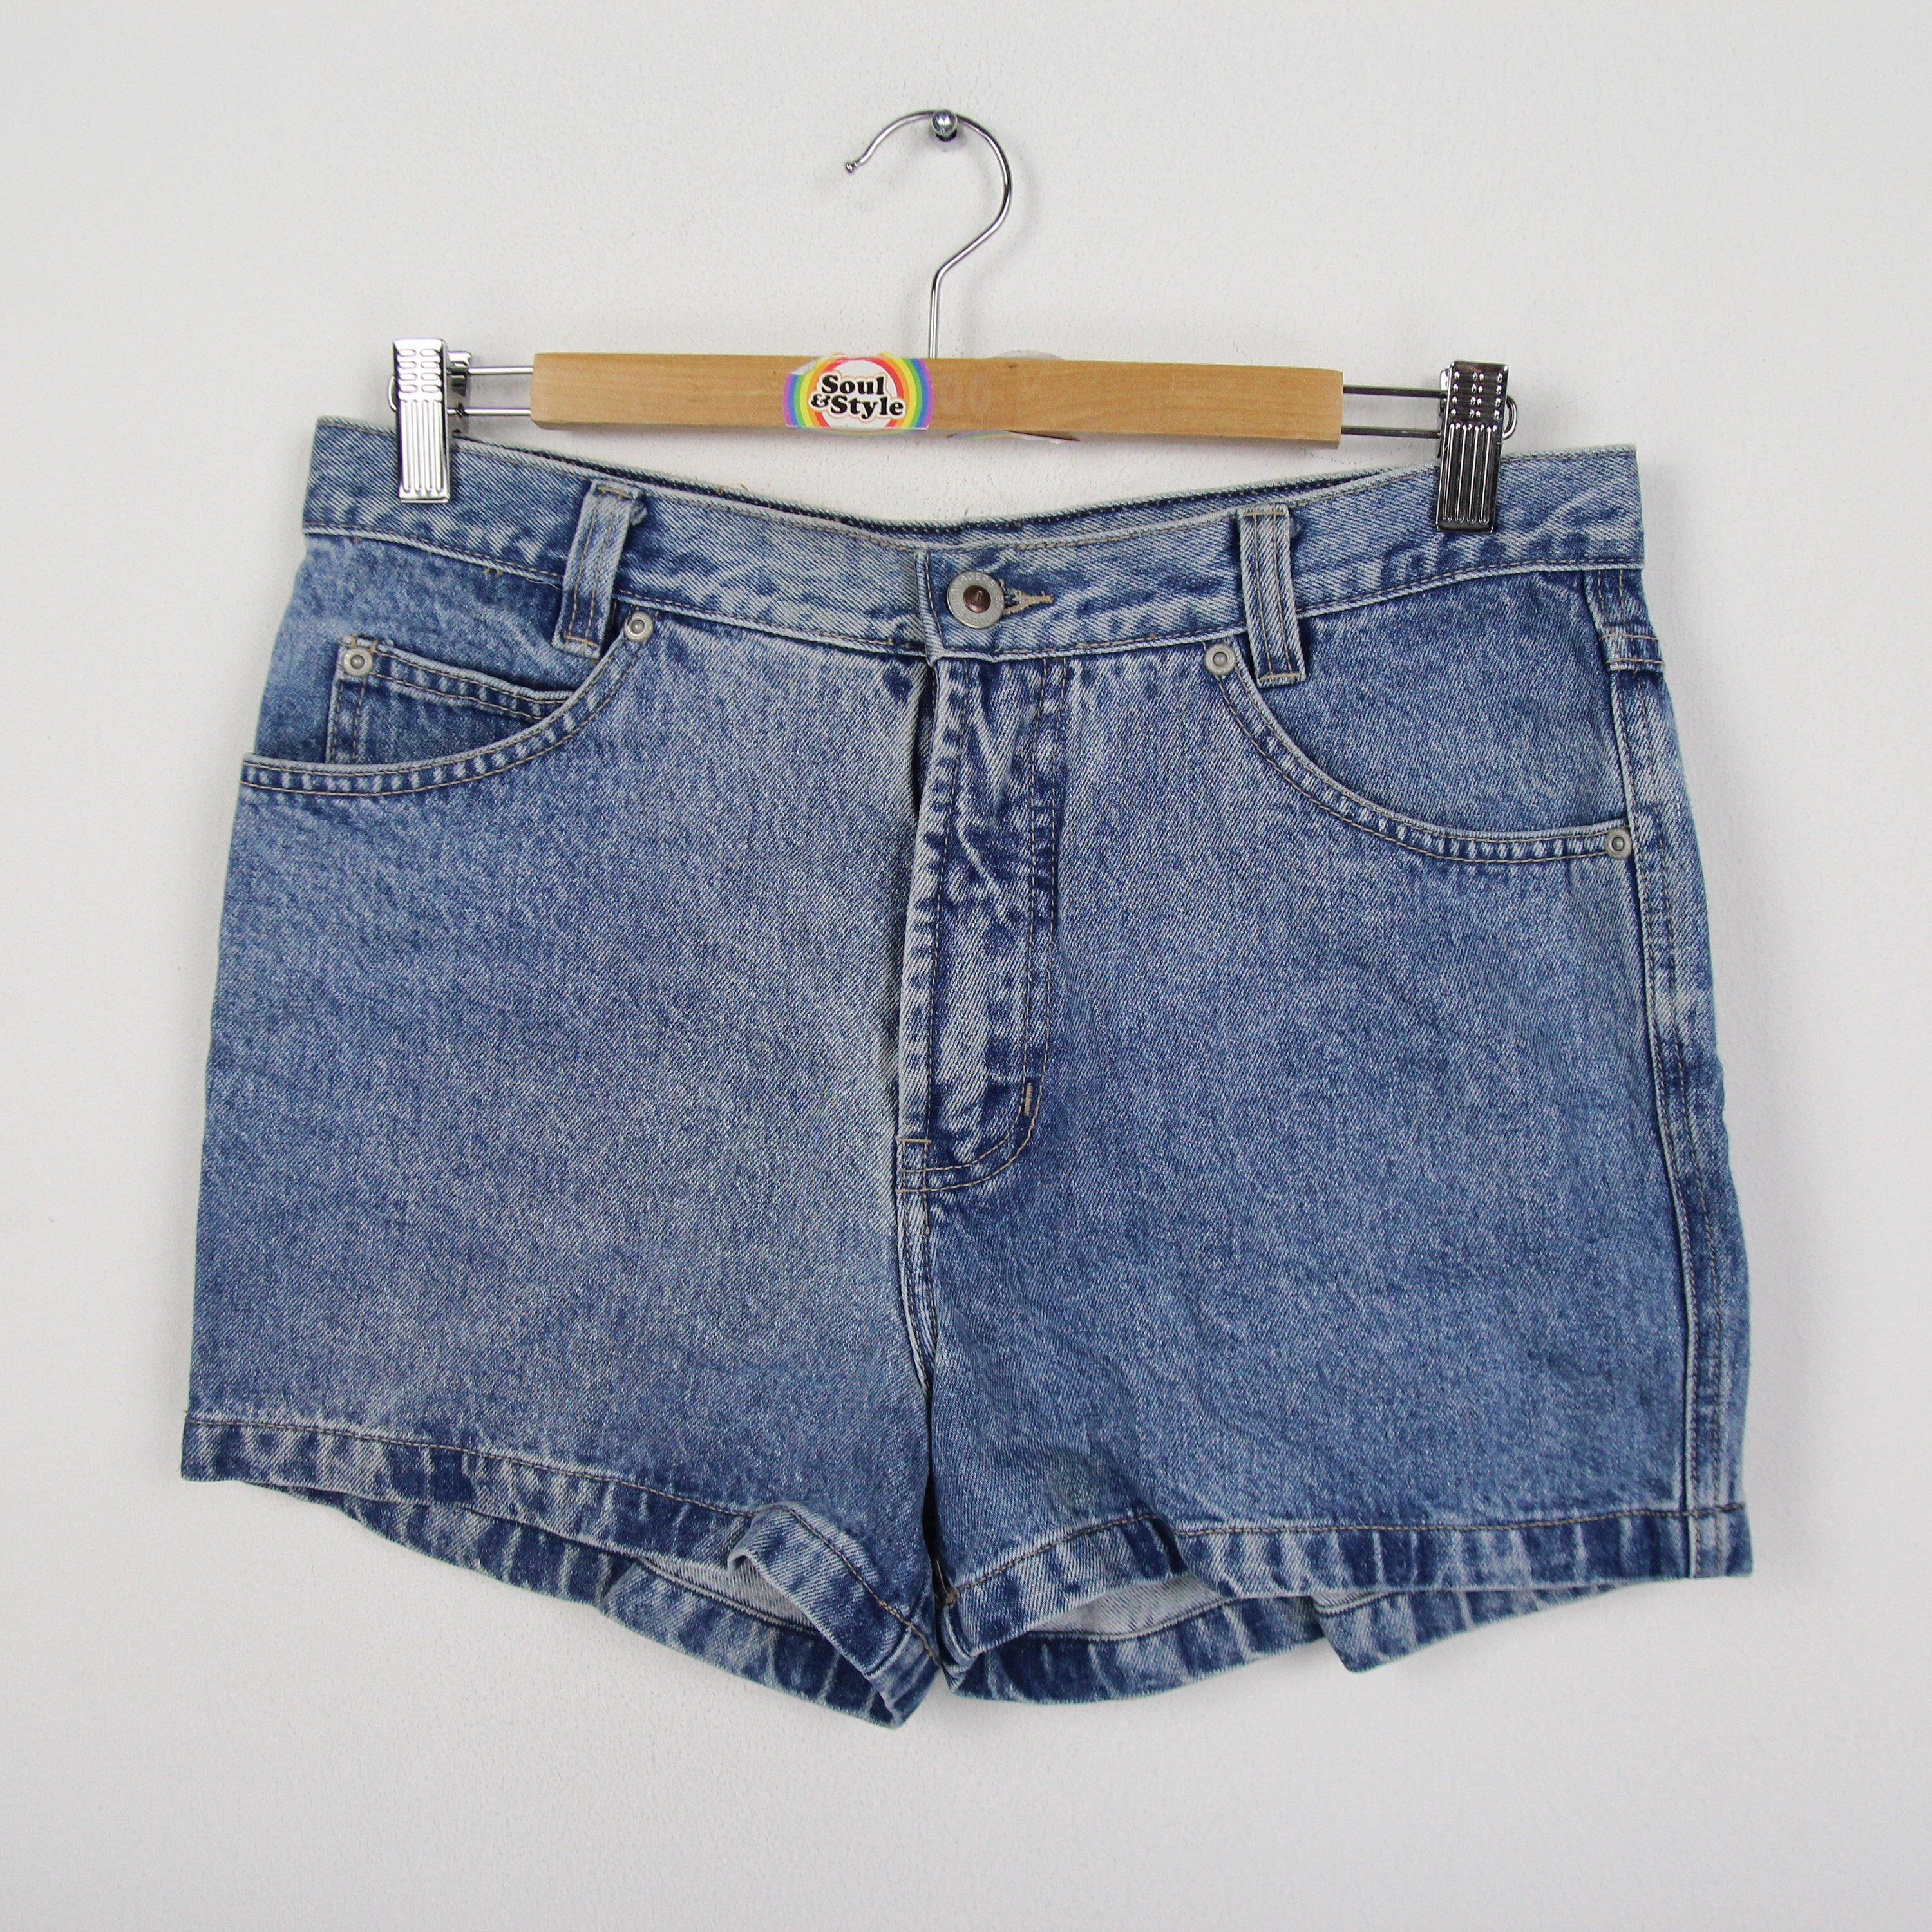 Frayed Distressed Jean Shorts, Hot Pink Short Jeans, Kids Hole Denim Pant,  Girls Summer Shorts, Girl Jeans Shorts 